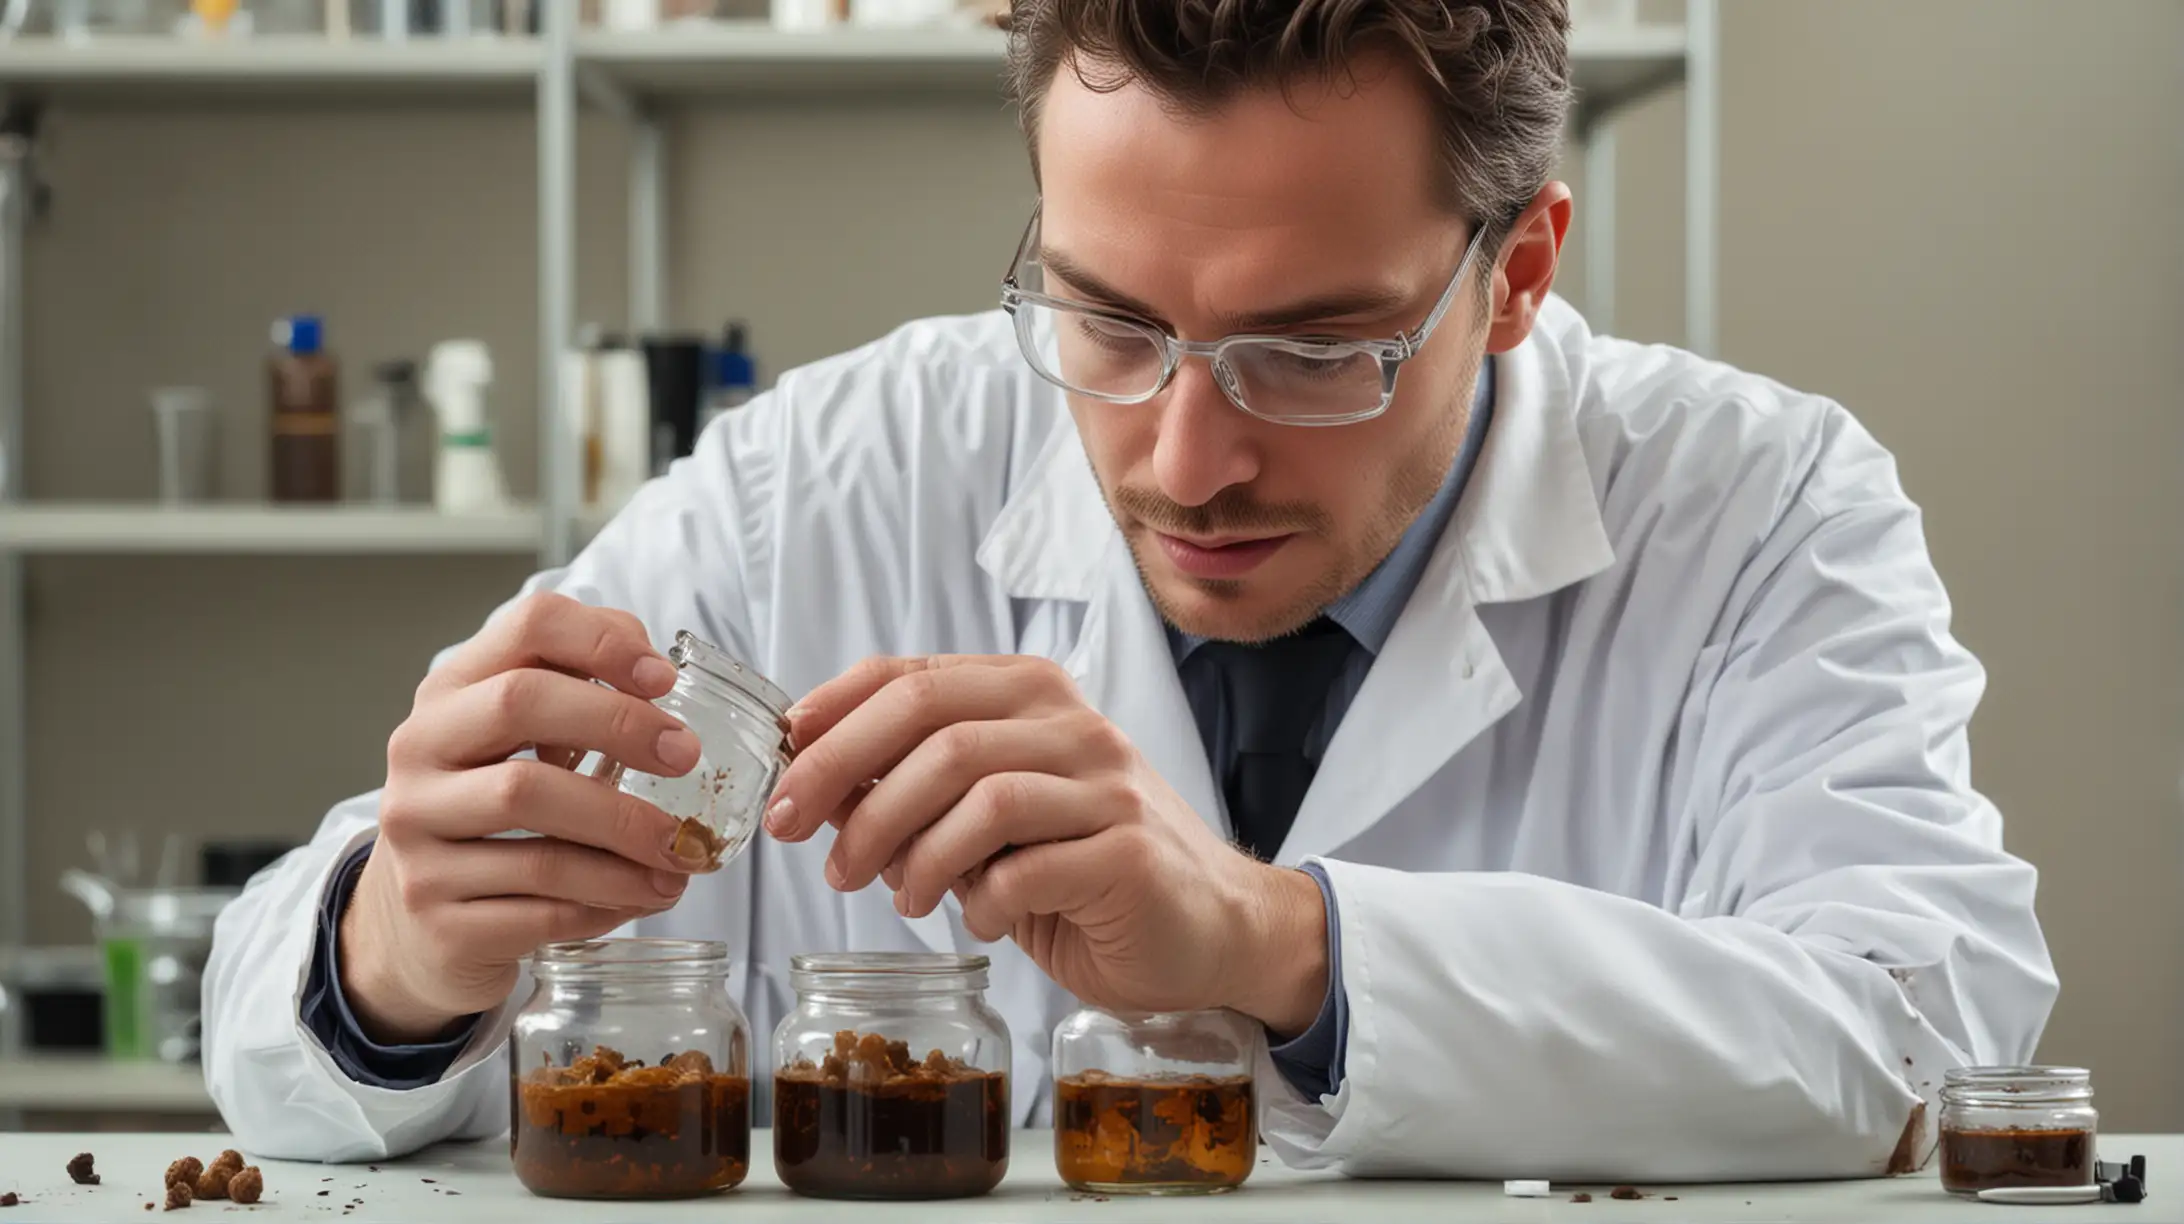 SCIENTIST IN A LAB EXAMINING FECES IN A TRANSPARANT JAR